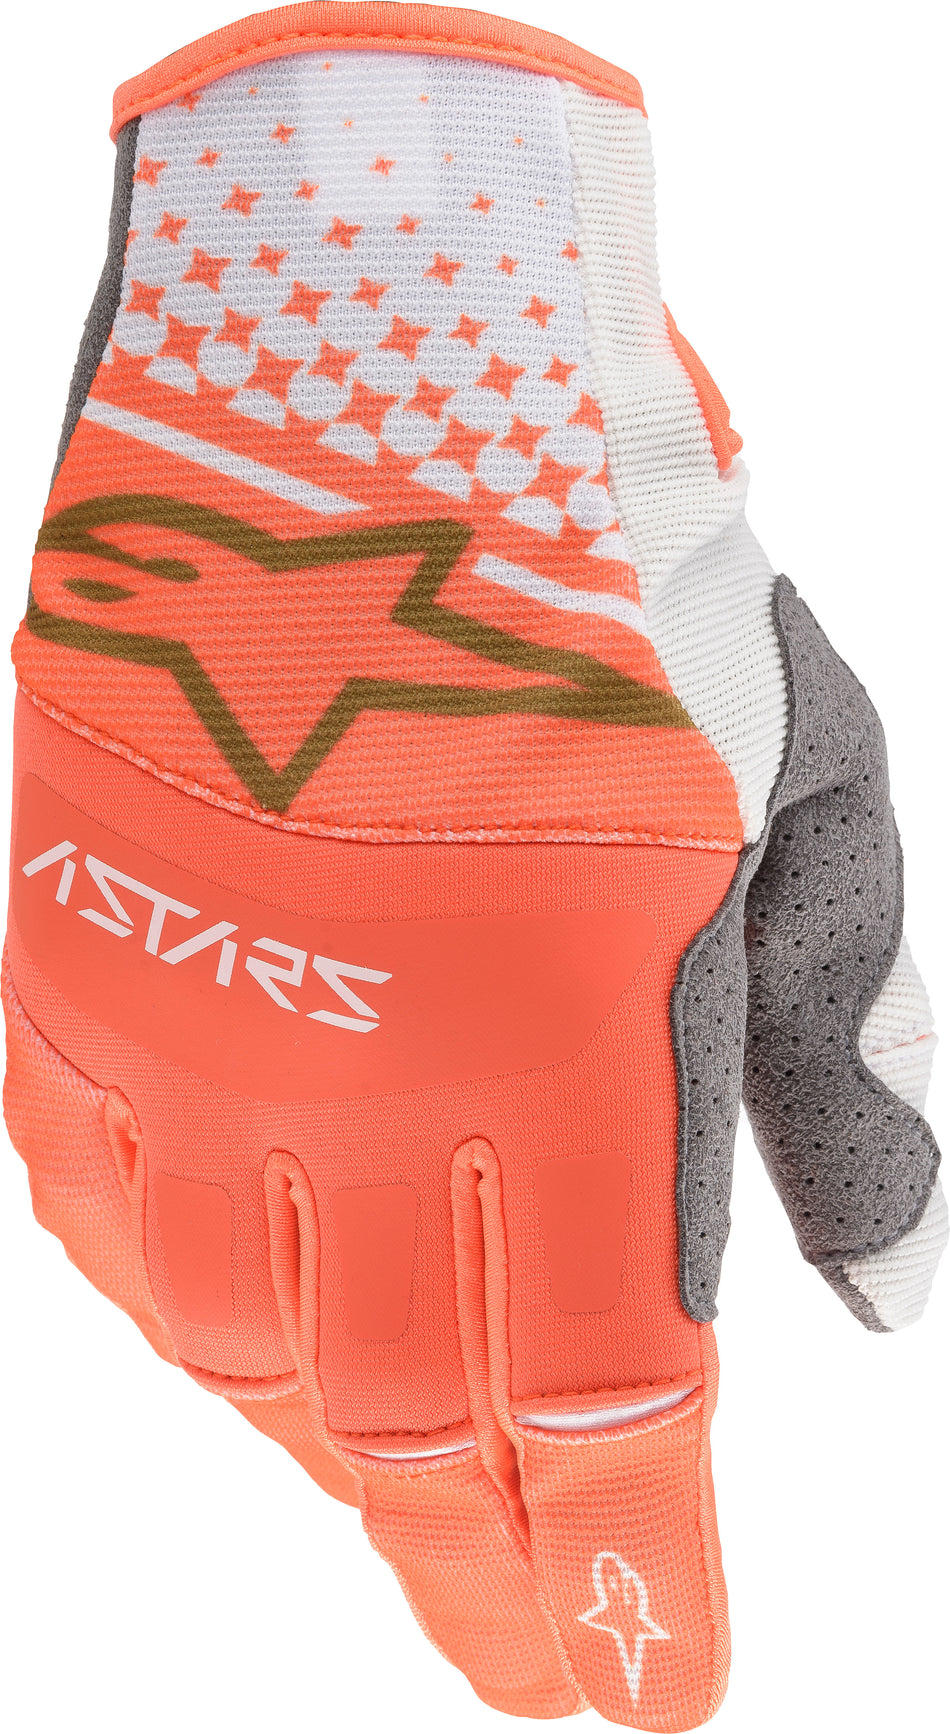 ALPINESTARS Techstar Gloves White/Orange/Gold Sm 3561020-2459-S